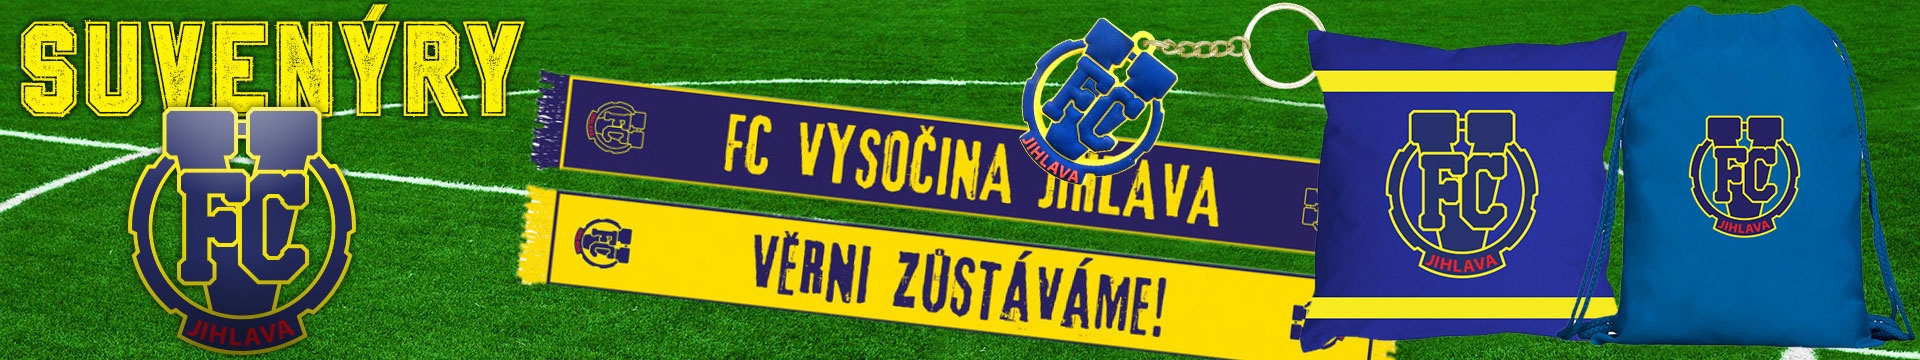 Suvenýry FC Vysočina Jihlava